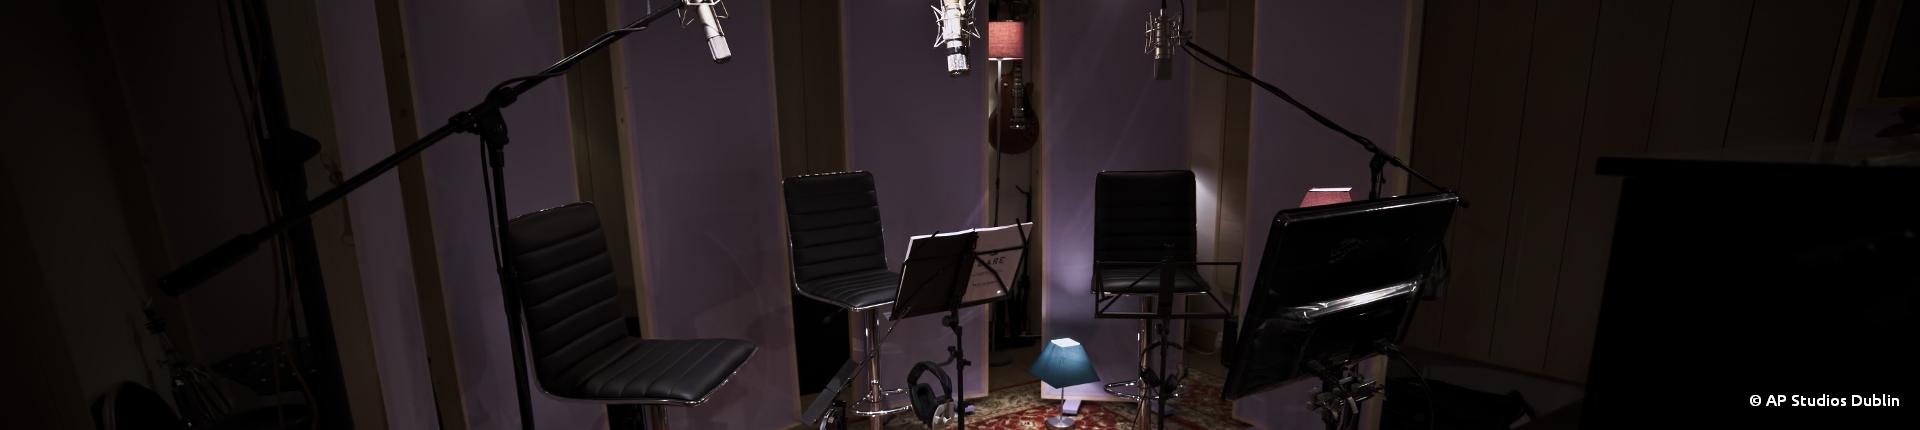 AP Recording Studios Dublin Voice Over/Dubbing Recording Set up